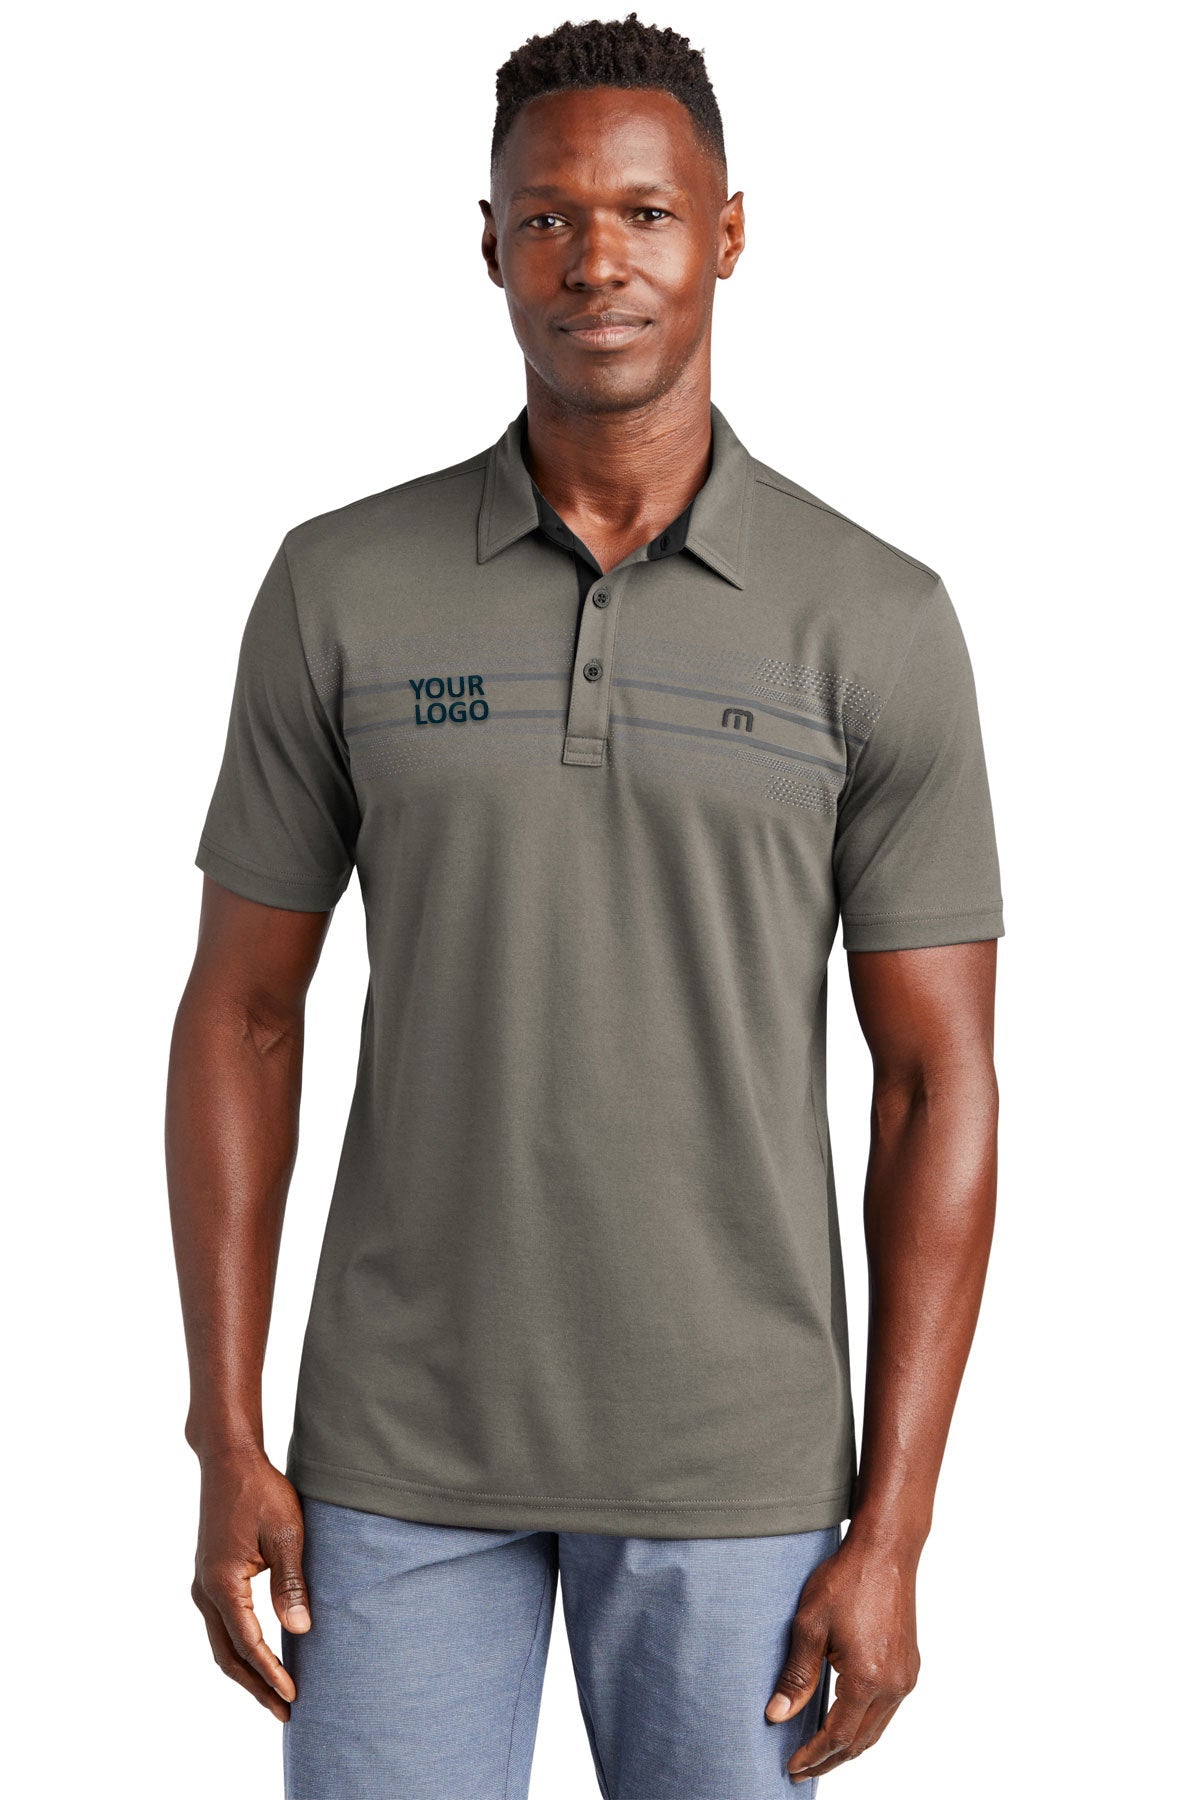 TravisMathew Quiet Shade Grey Polos custom logo polo shirts